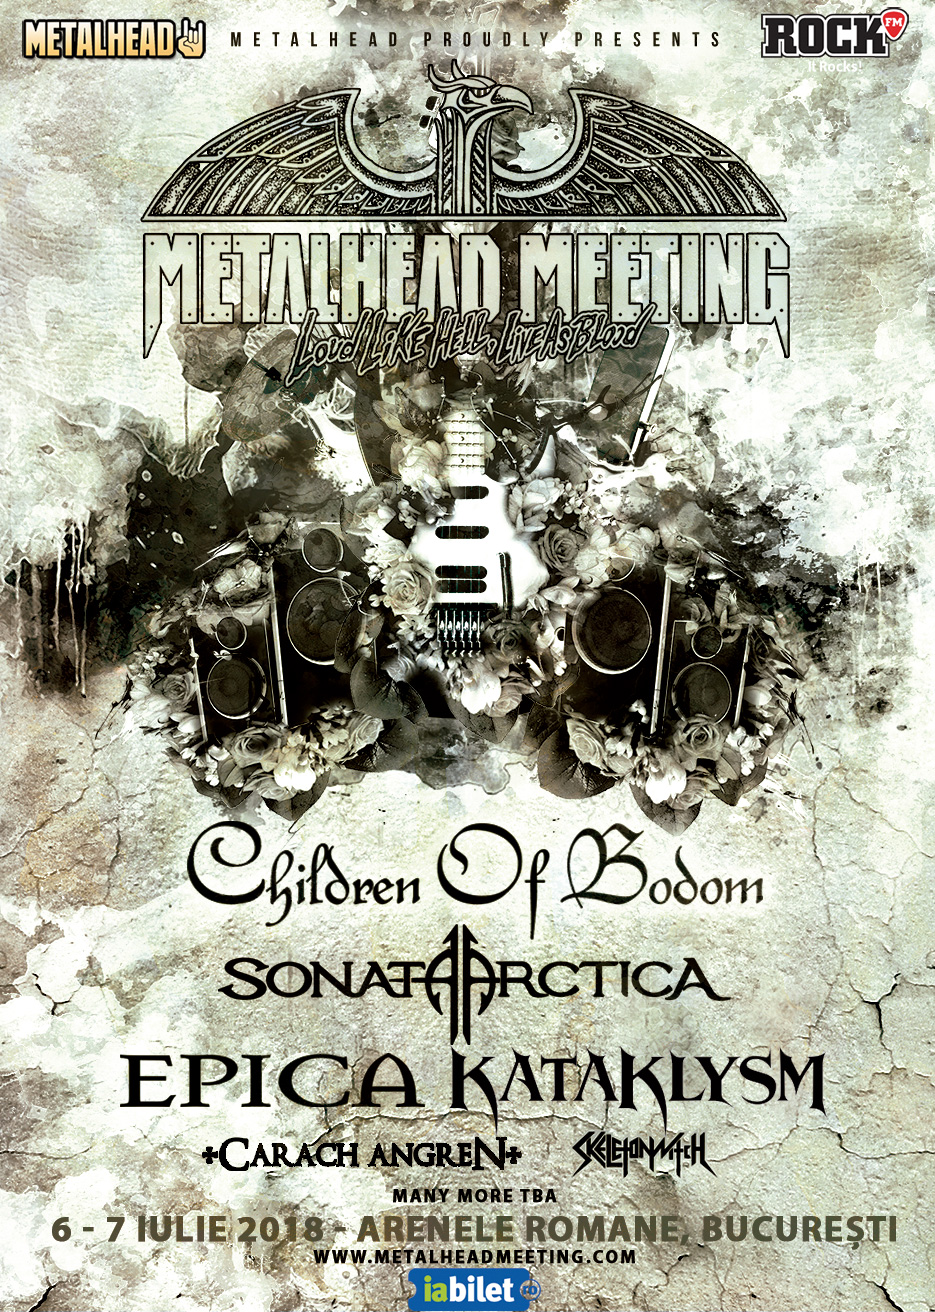 SONATA ARCTICA, Epica, Kataklysm, Carach Angren si Skeletonwitch confirmate la Metalhead Meeting Festival 2018